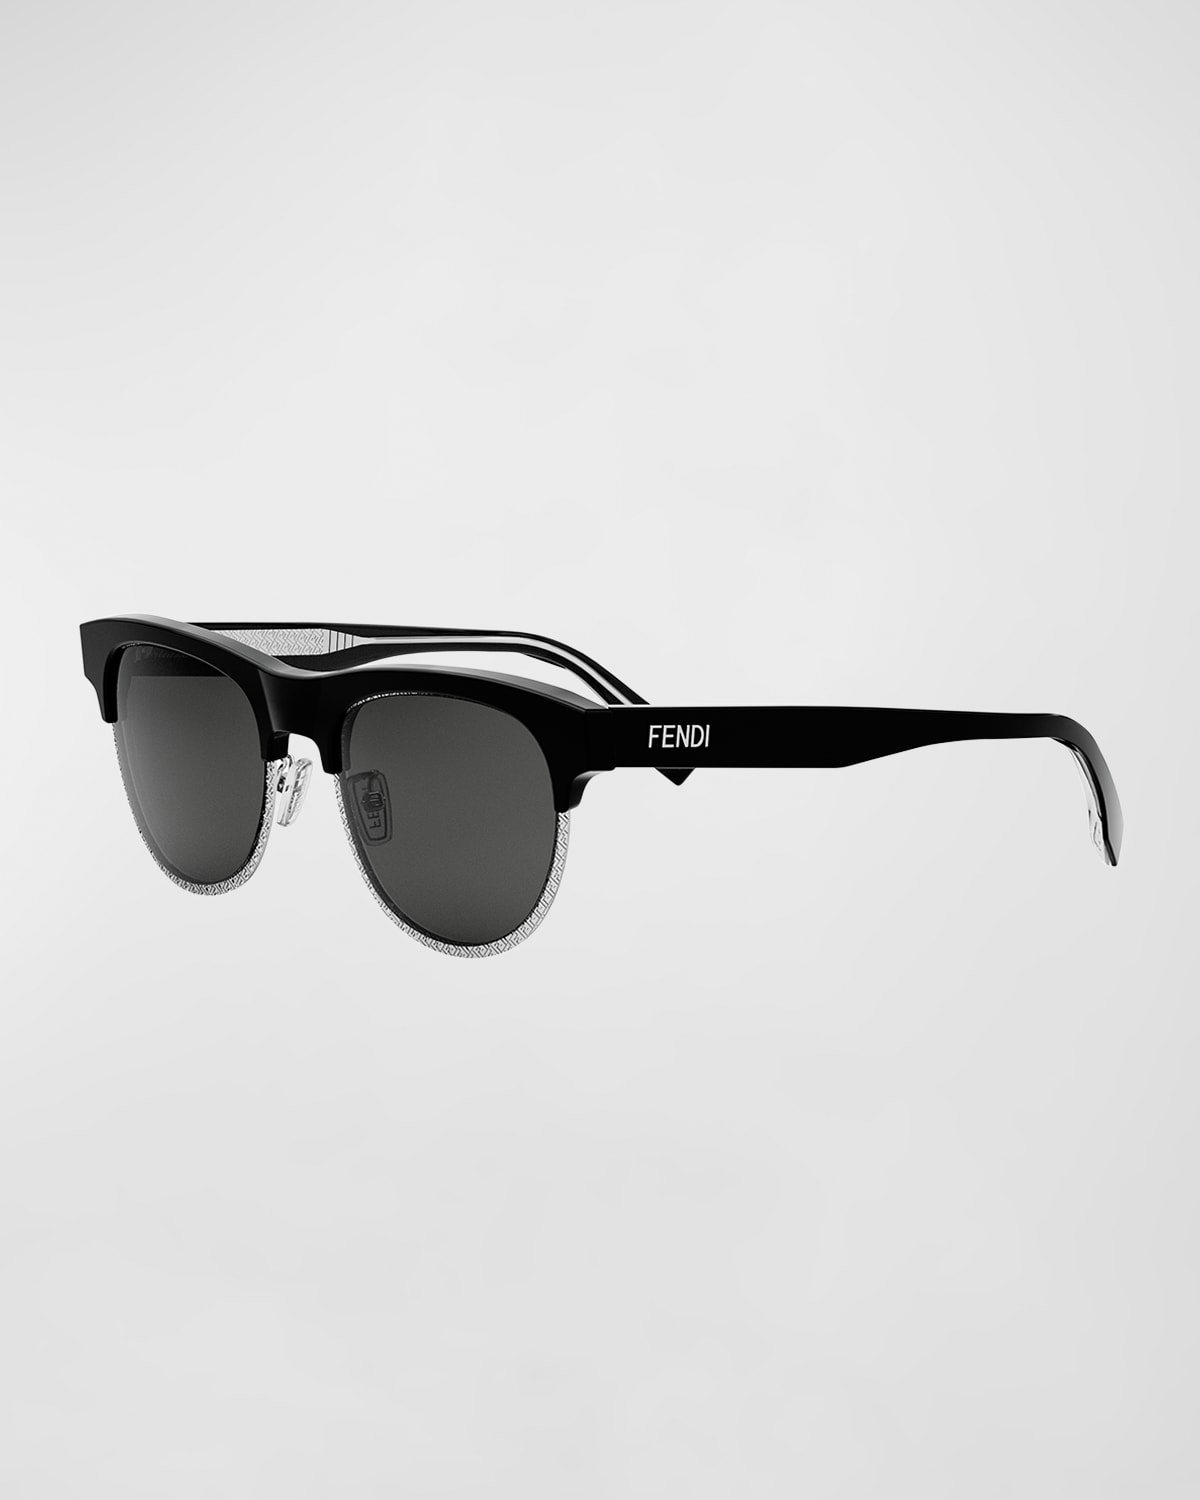 Fendi Travel Round Sunglasses, 51mm In Black/gray Solid